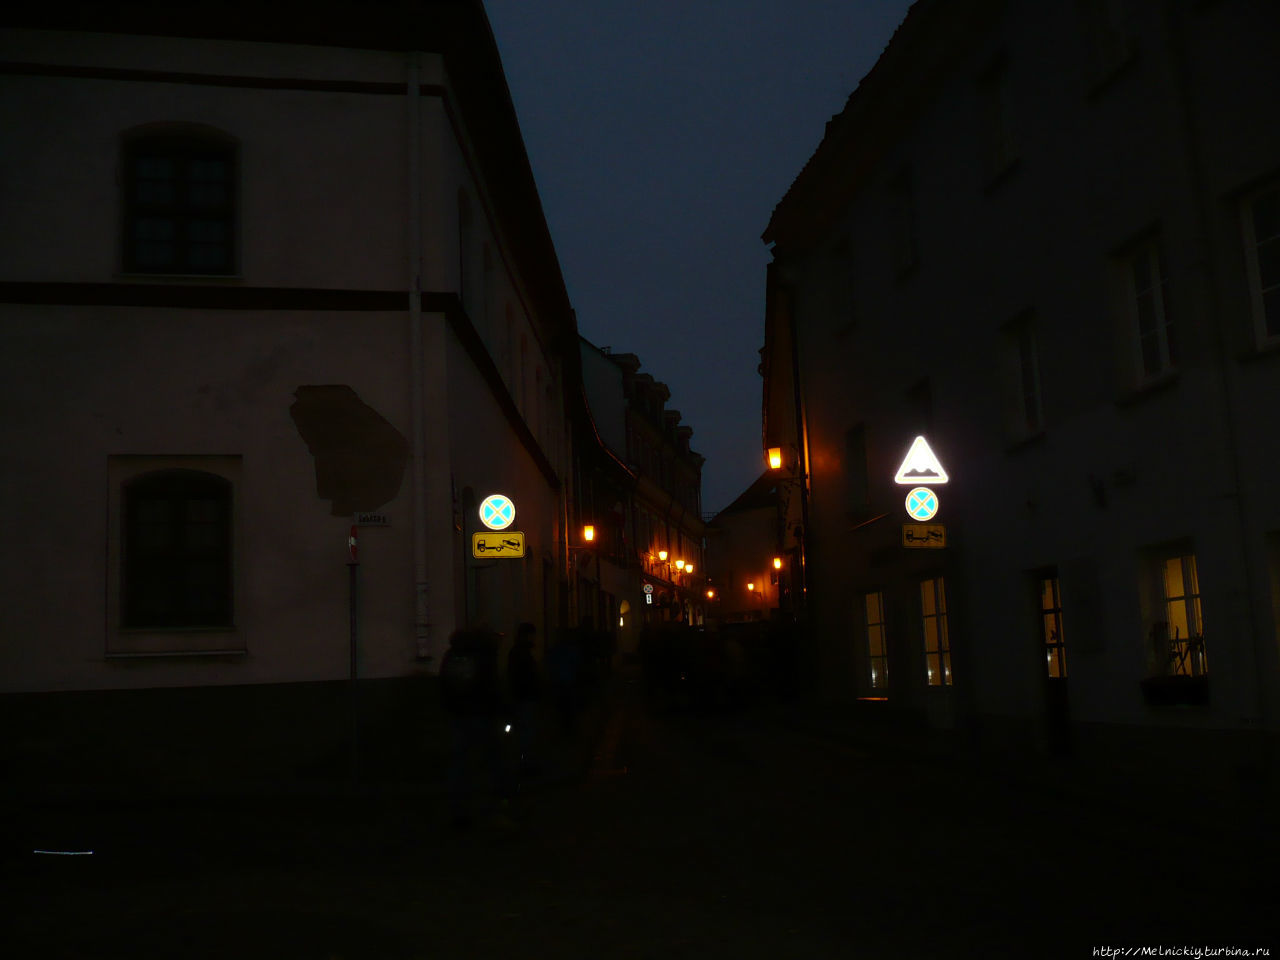 Вечерний променад по старинным улочкам Вильнюса Вильнюс, Литва